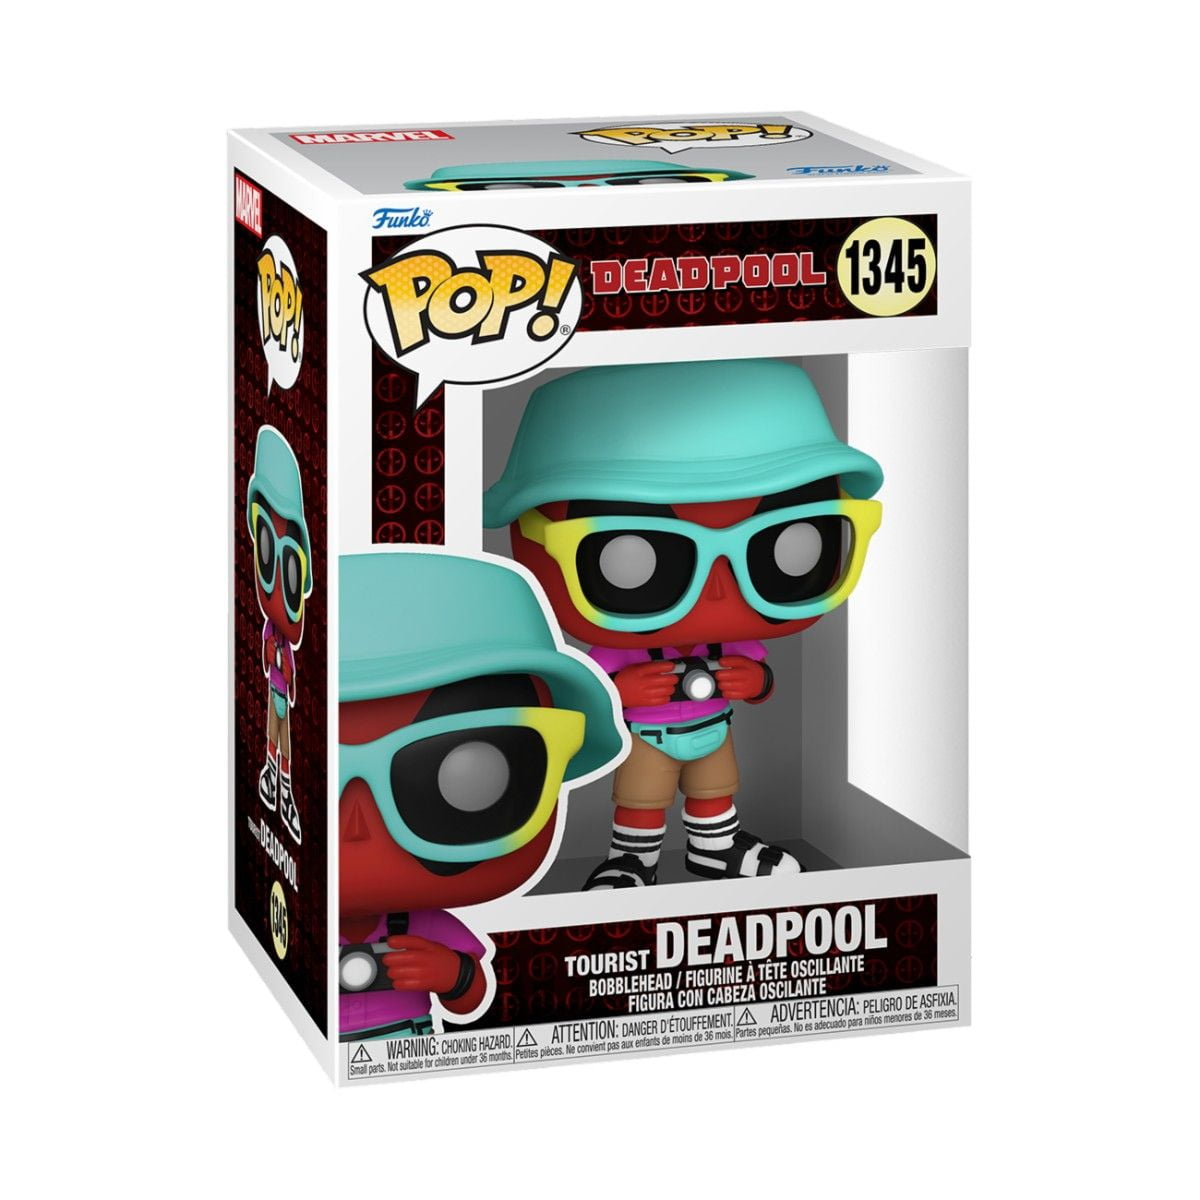 Tourist - Deadpool - Funko POP! Marvel (1345)